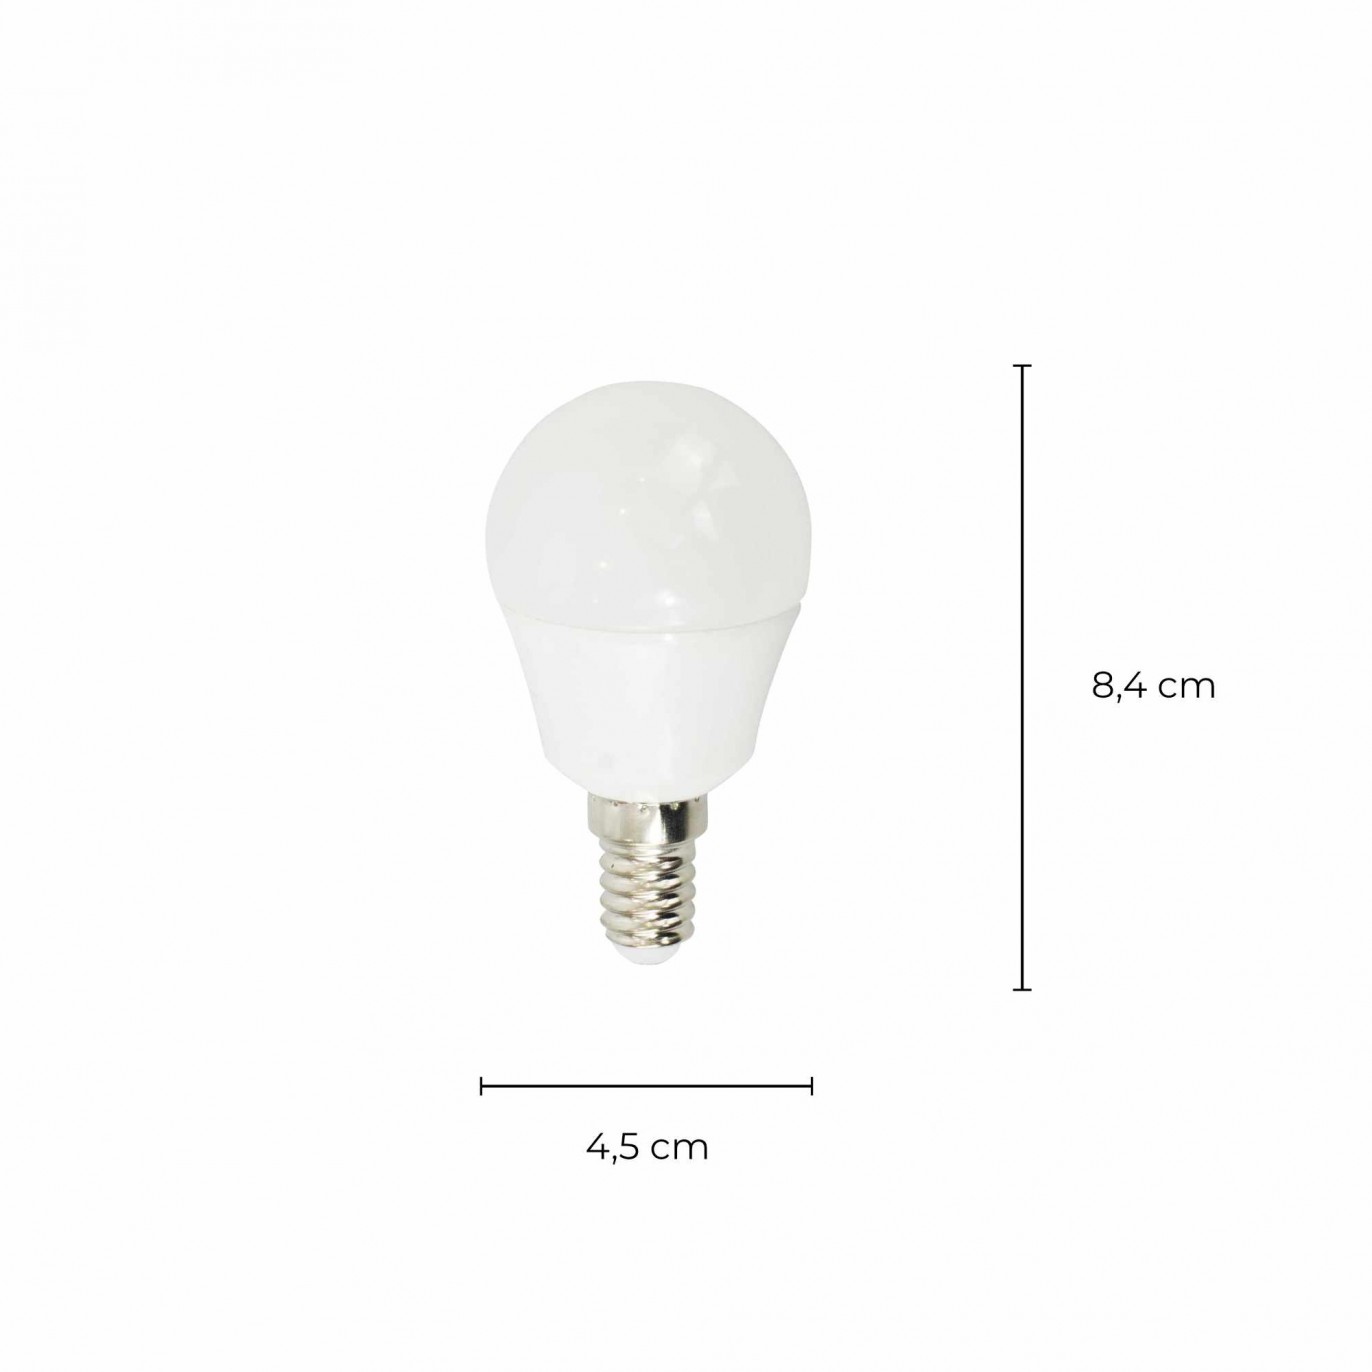 Bonlux 15W Dimmable E14 Ampoule Lampe de Sel Blanc Chaud 2700K